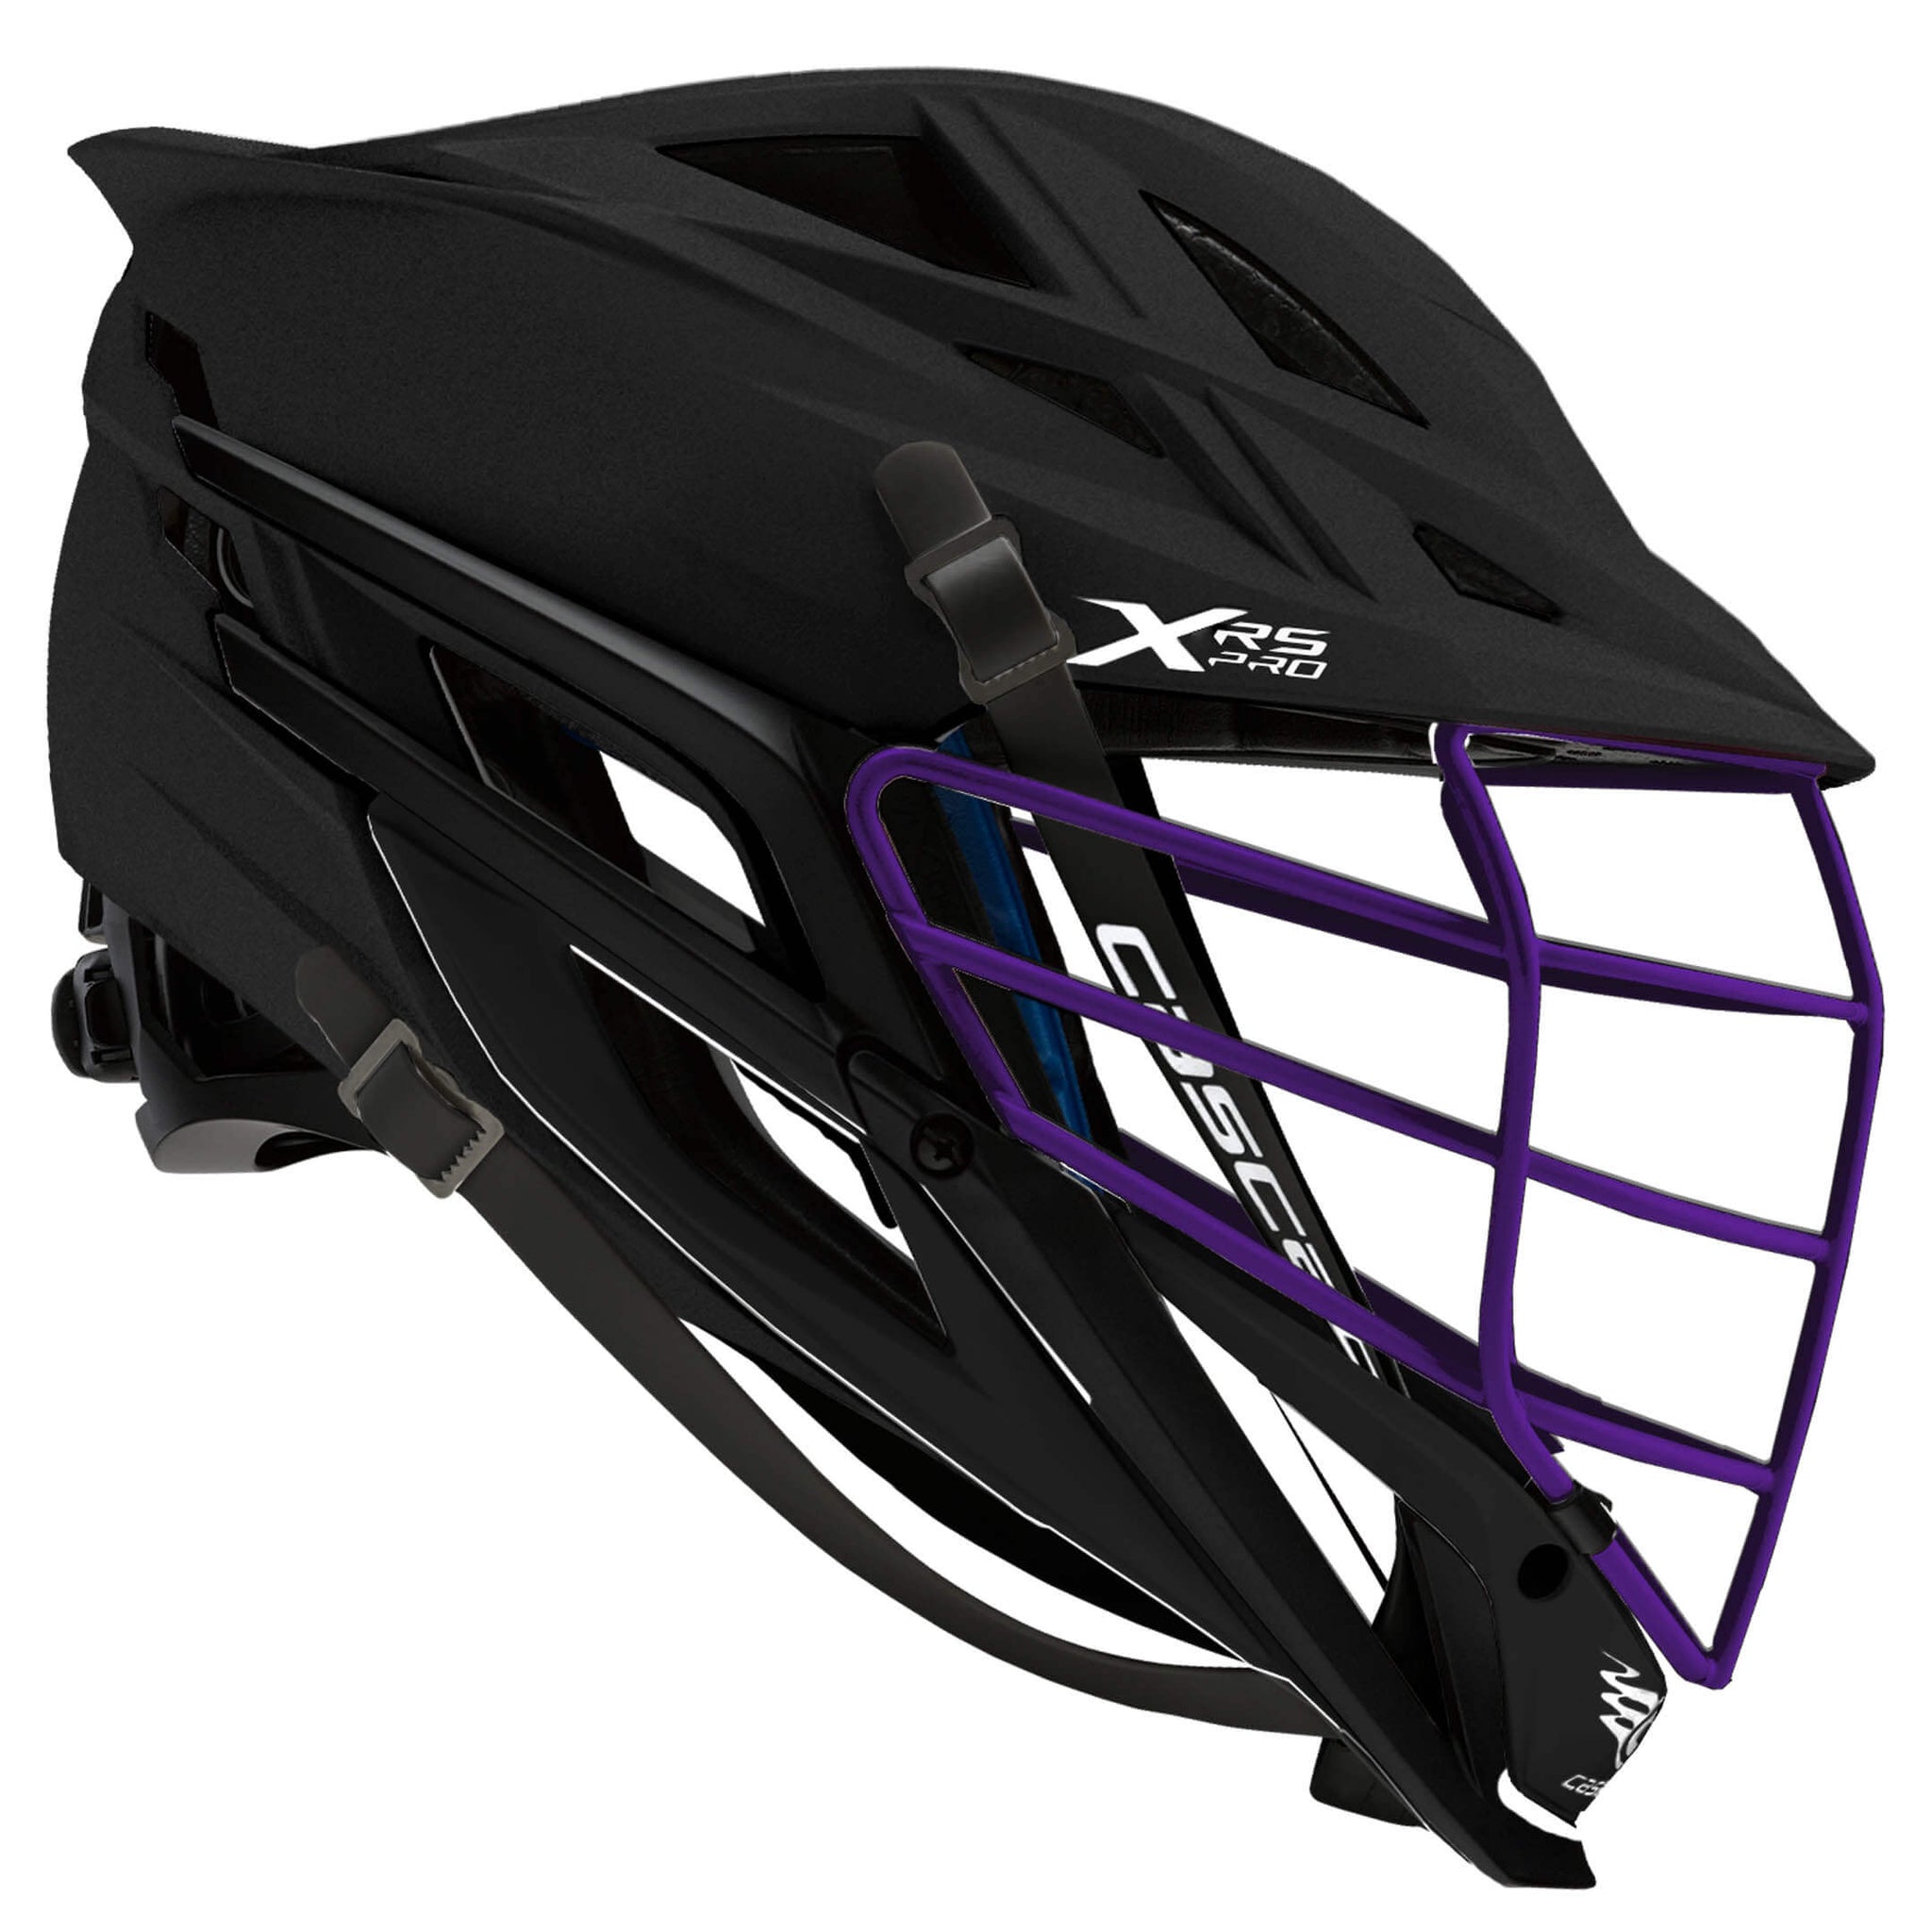 Cascade XRS Pro Helmet - Matte Black Shell - Purple Mask - Black Chin - Black Strap